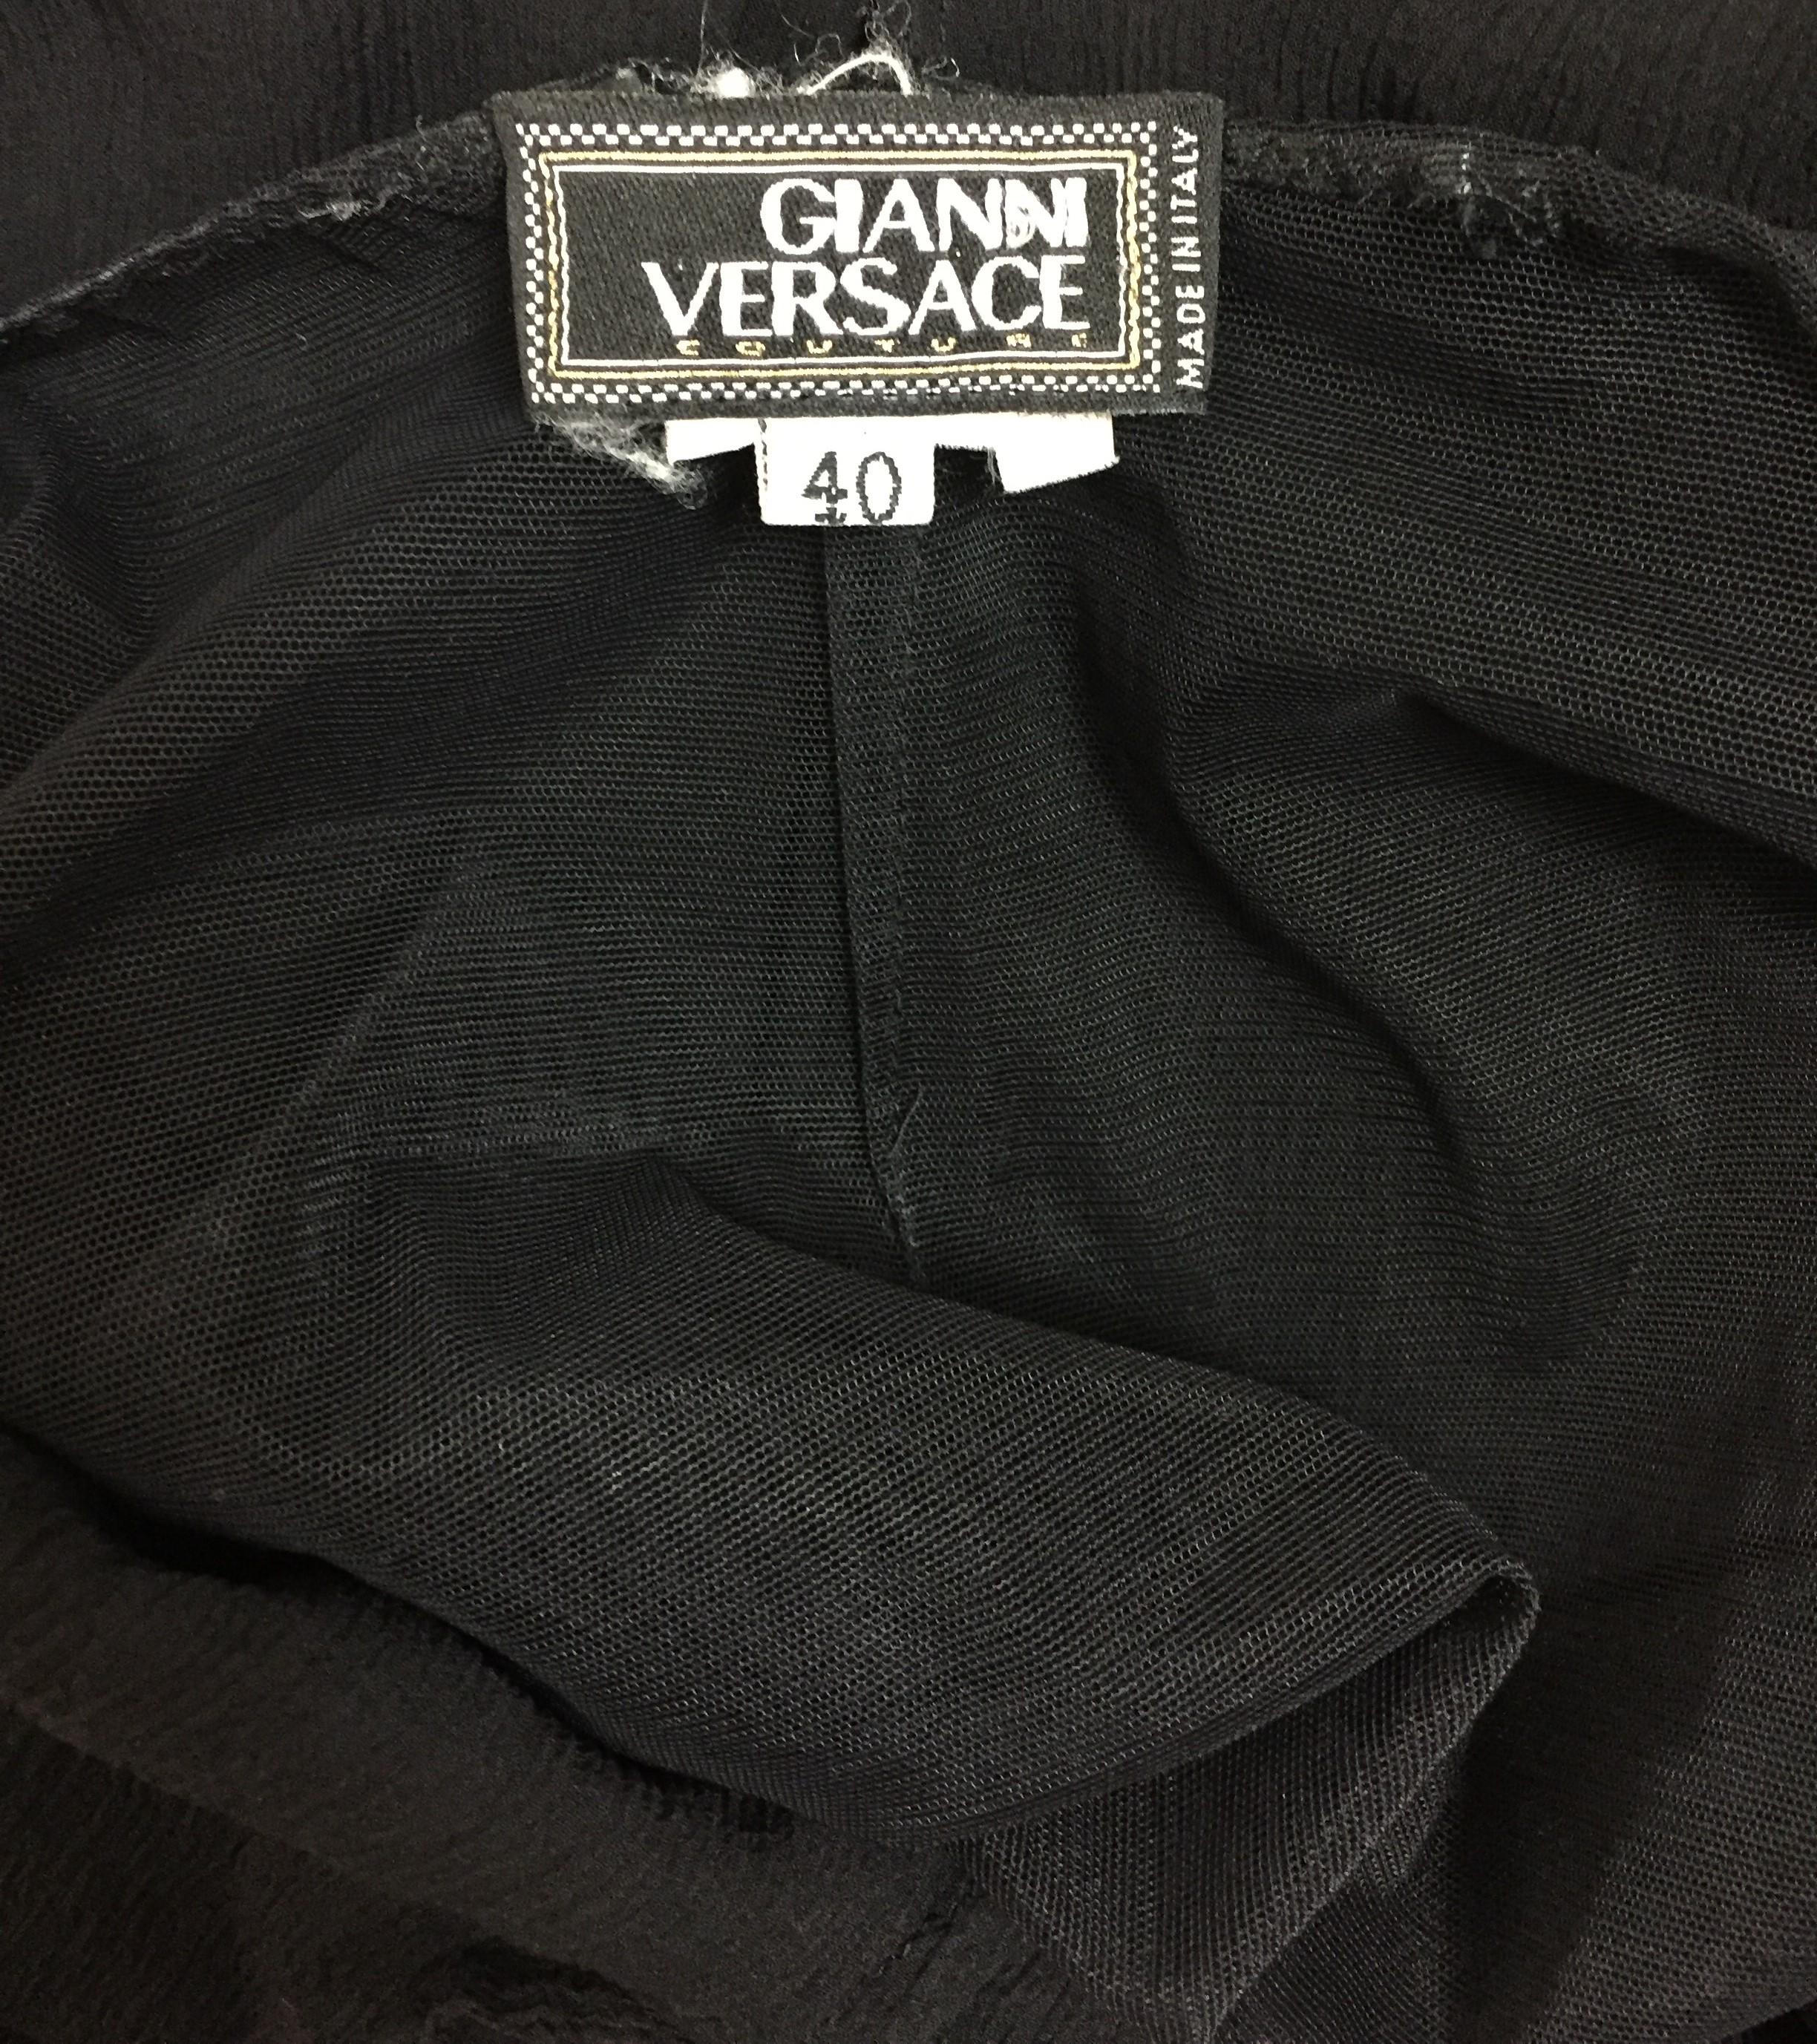 C. 2000 Gianni Versace Sheer Black Silk Plunging Grecian Gown Dress 2